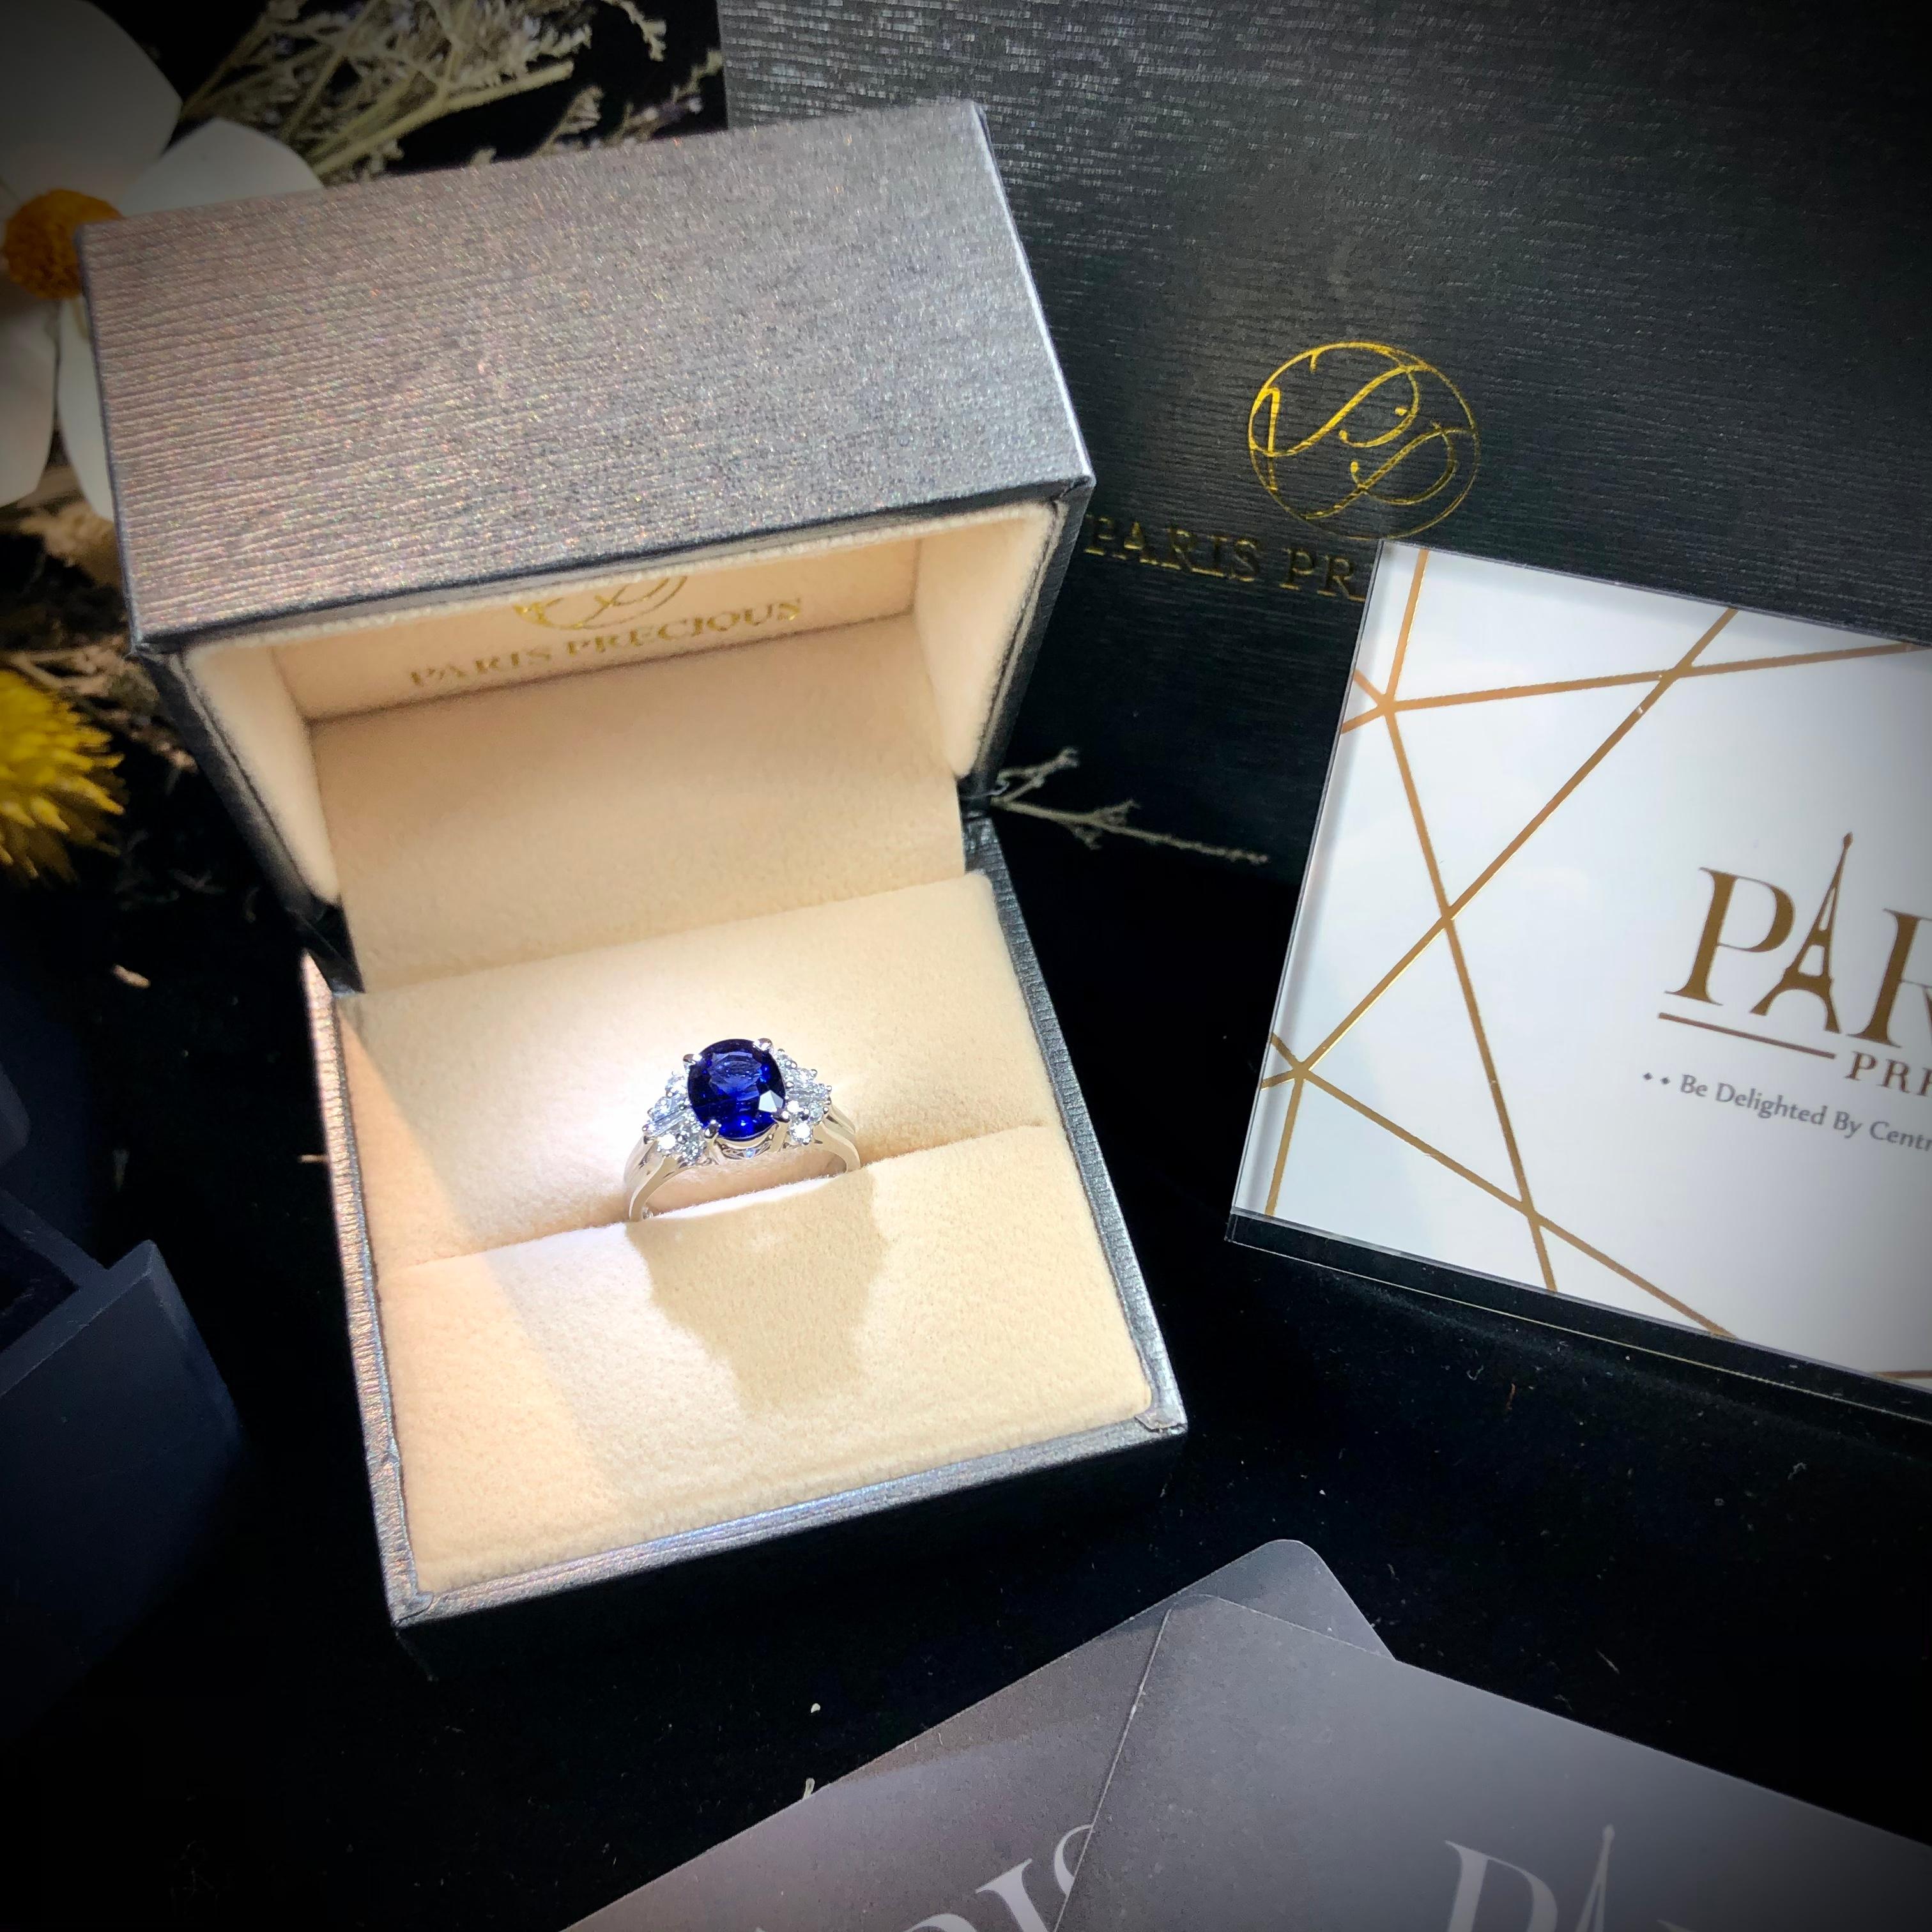 Paris Craft House 2.13 Carat Blue Sapphire Diamond Cocktail Ring in Platinum For Sale 2